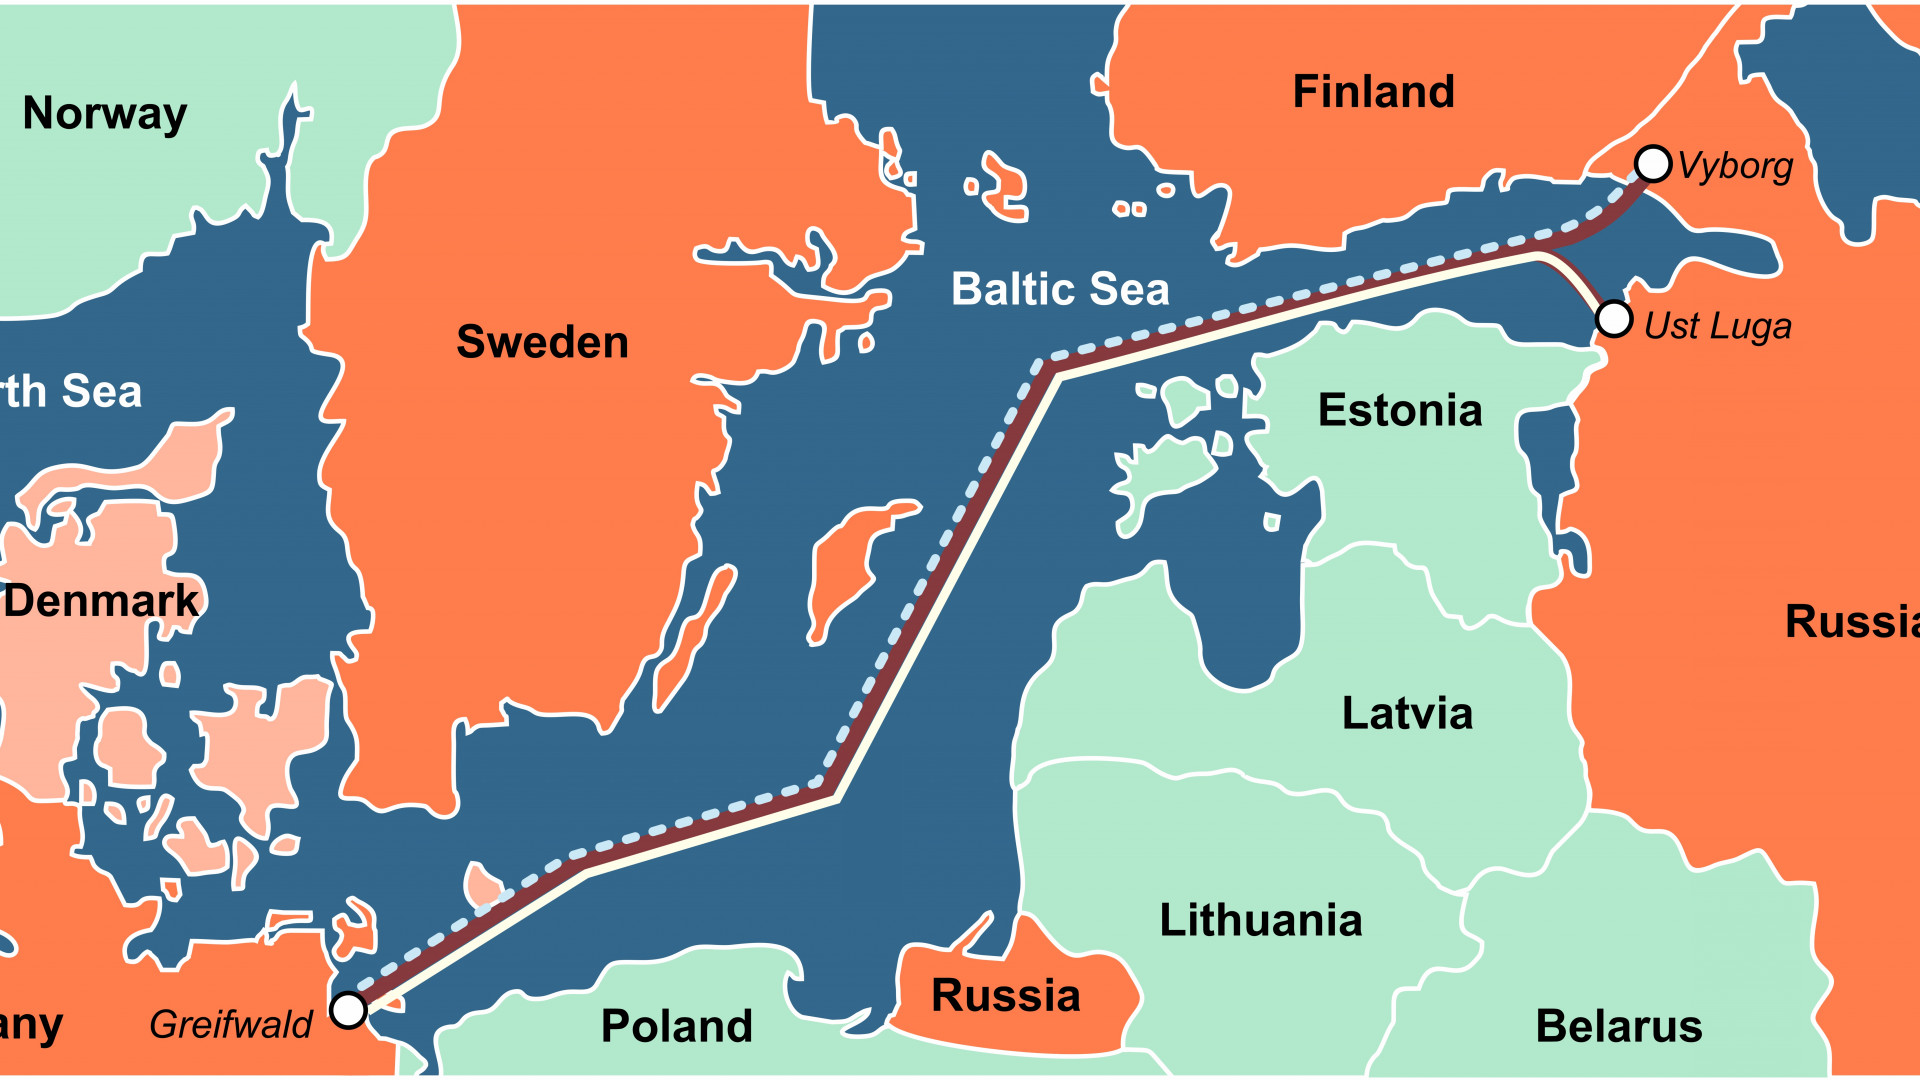 Ukraine demands the closure of the Nord Stream 1 gas pipeline